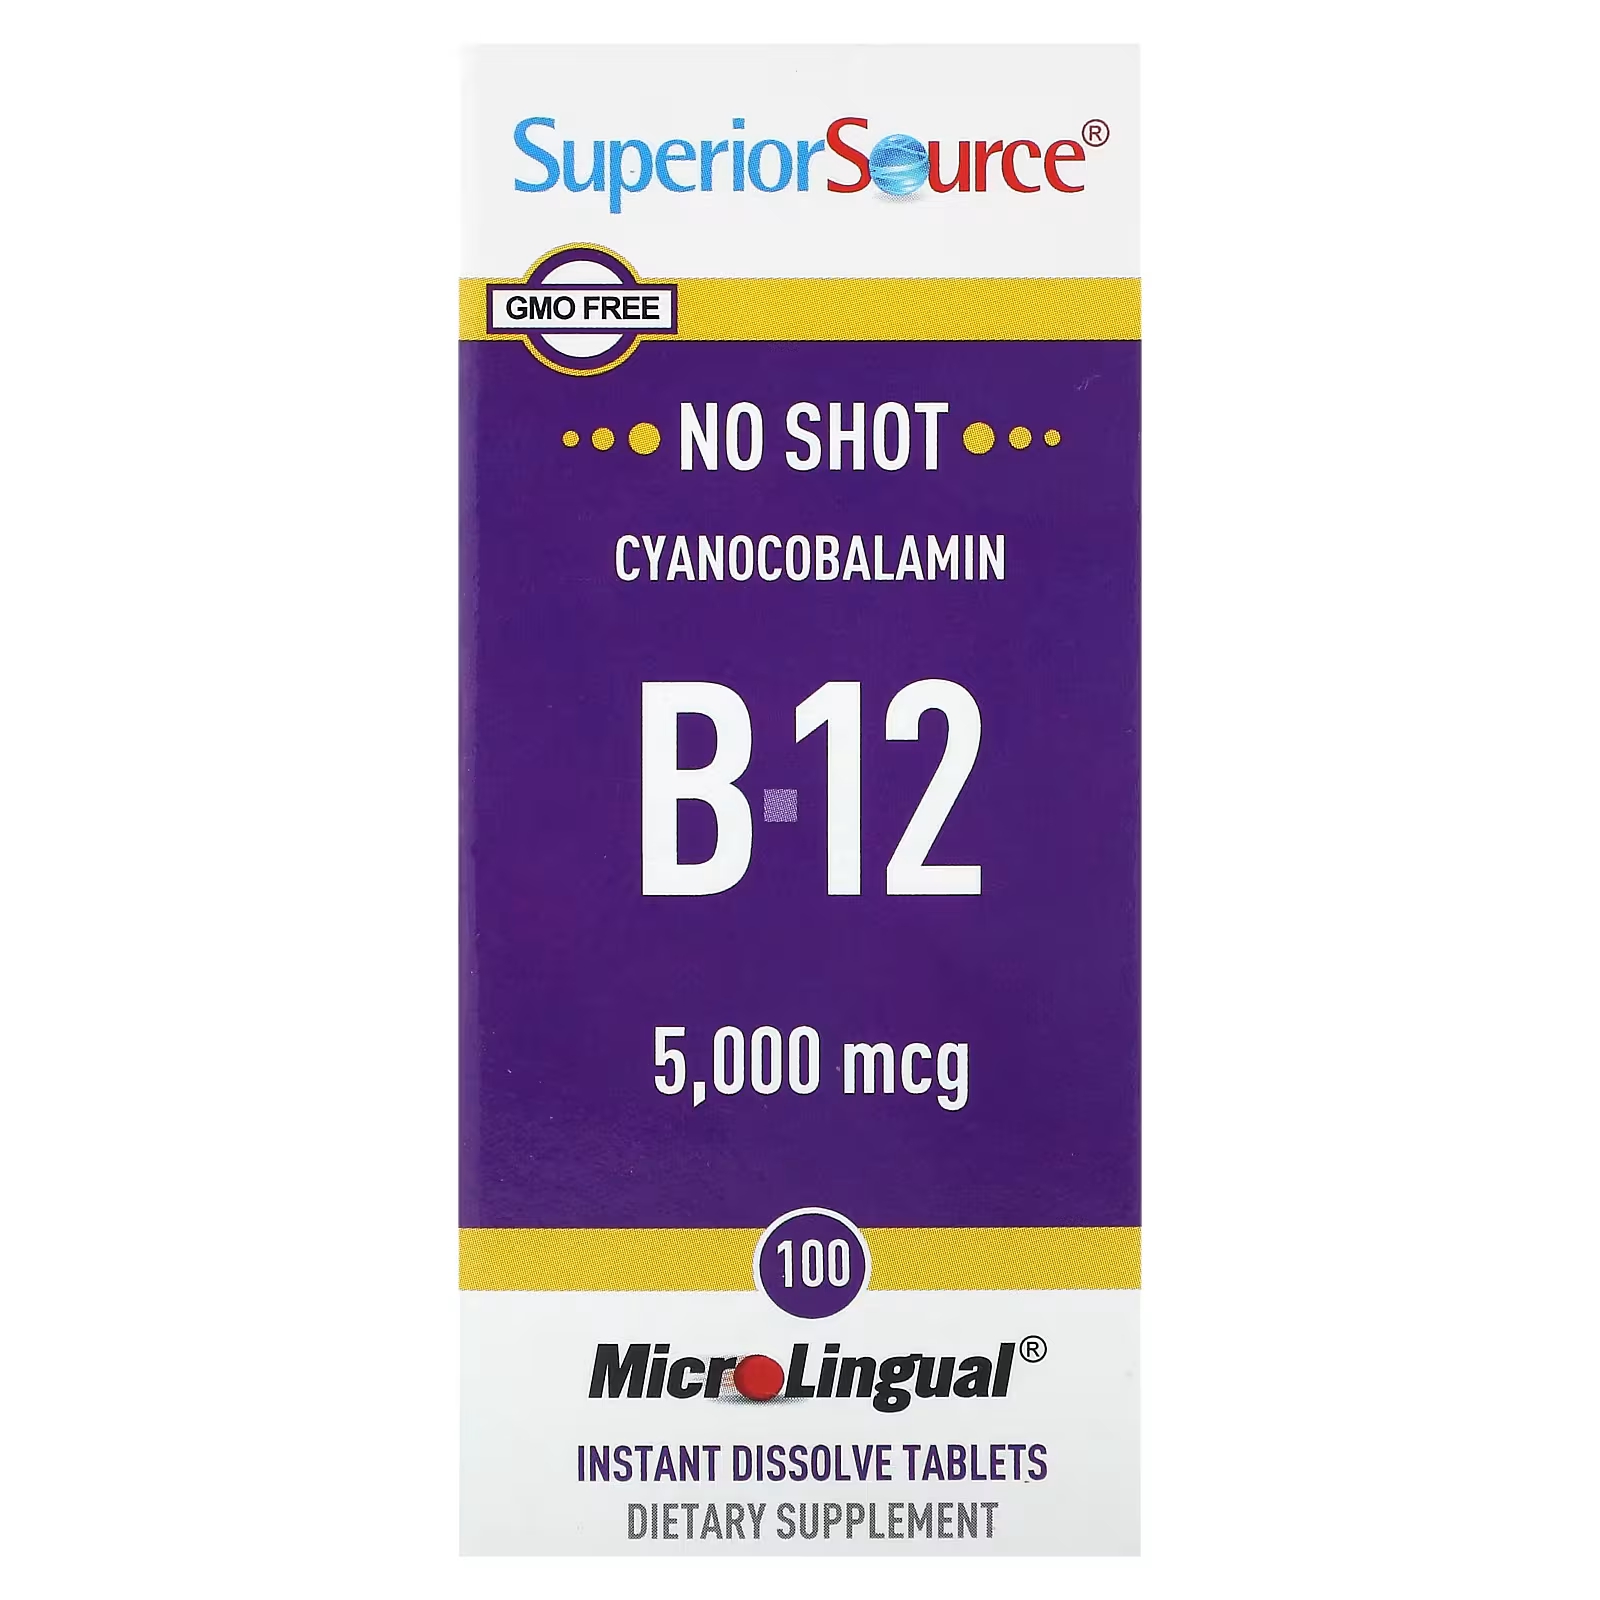 цена Пищевая добавка MicroLingual Superior Source B-12 цианокобаламин, 100 растворяющихся таблеток